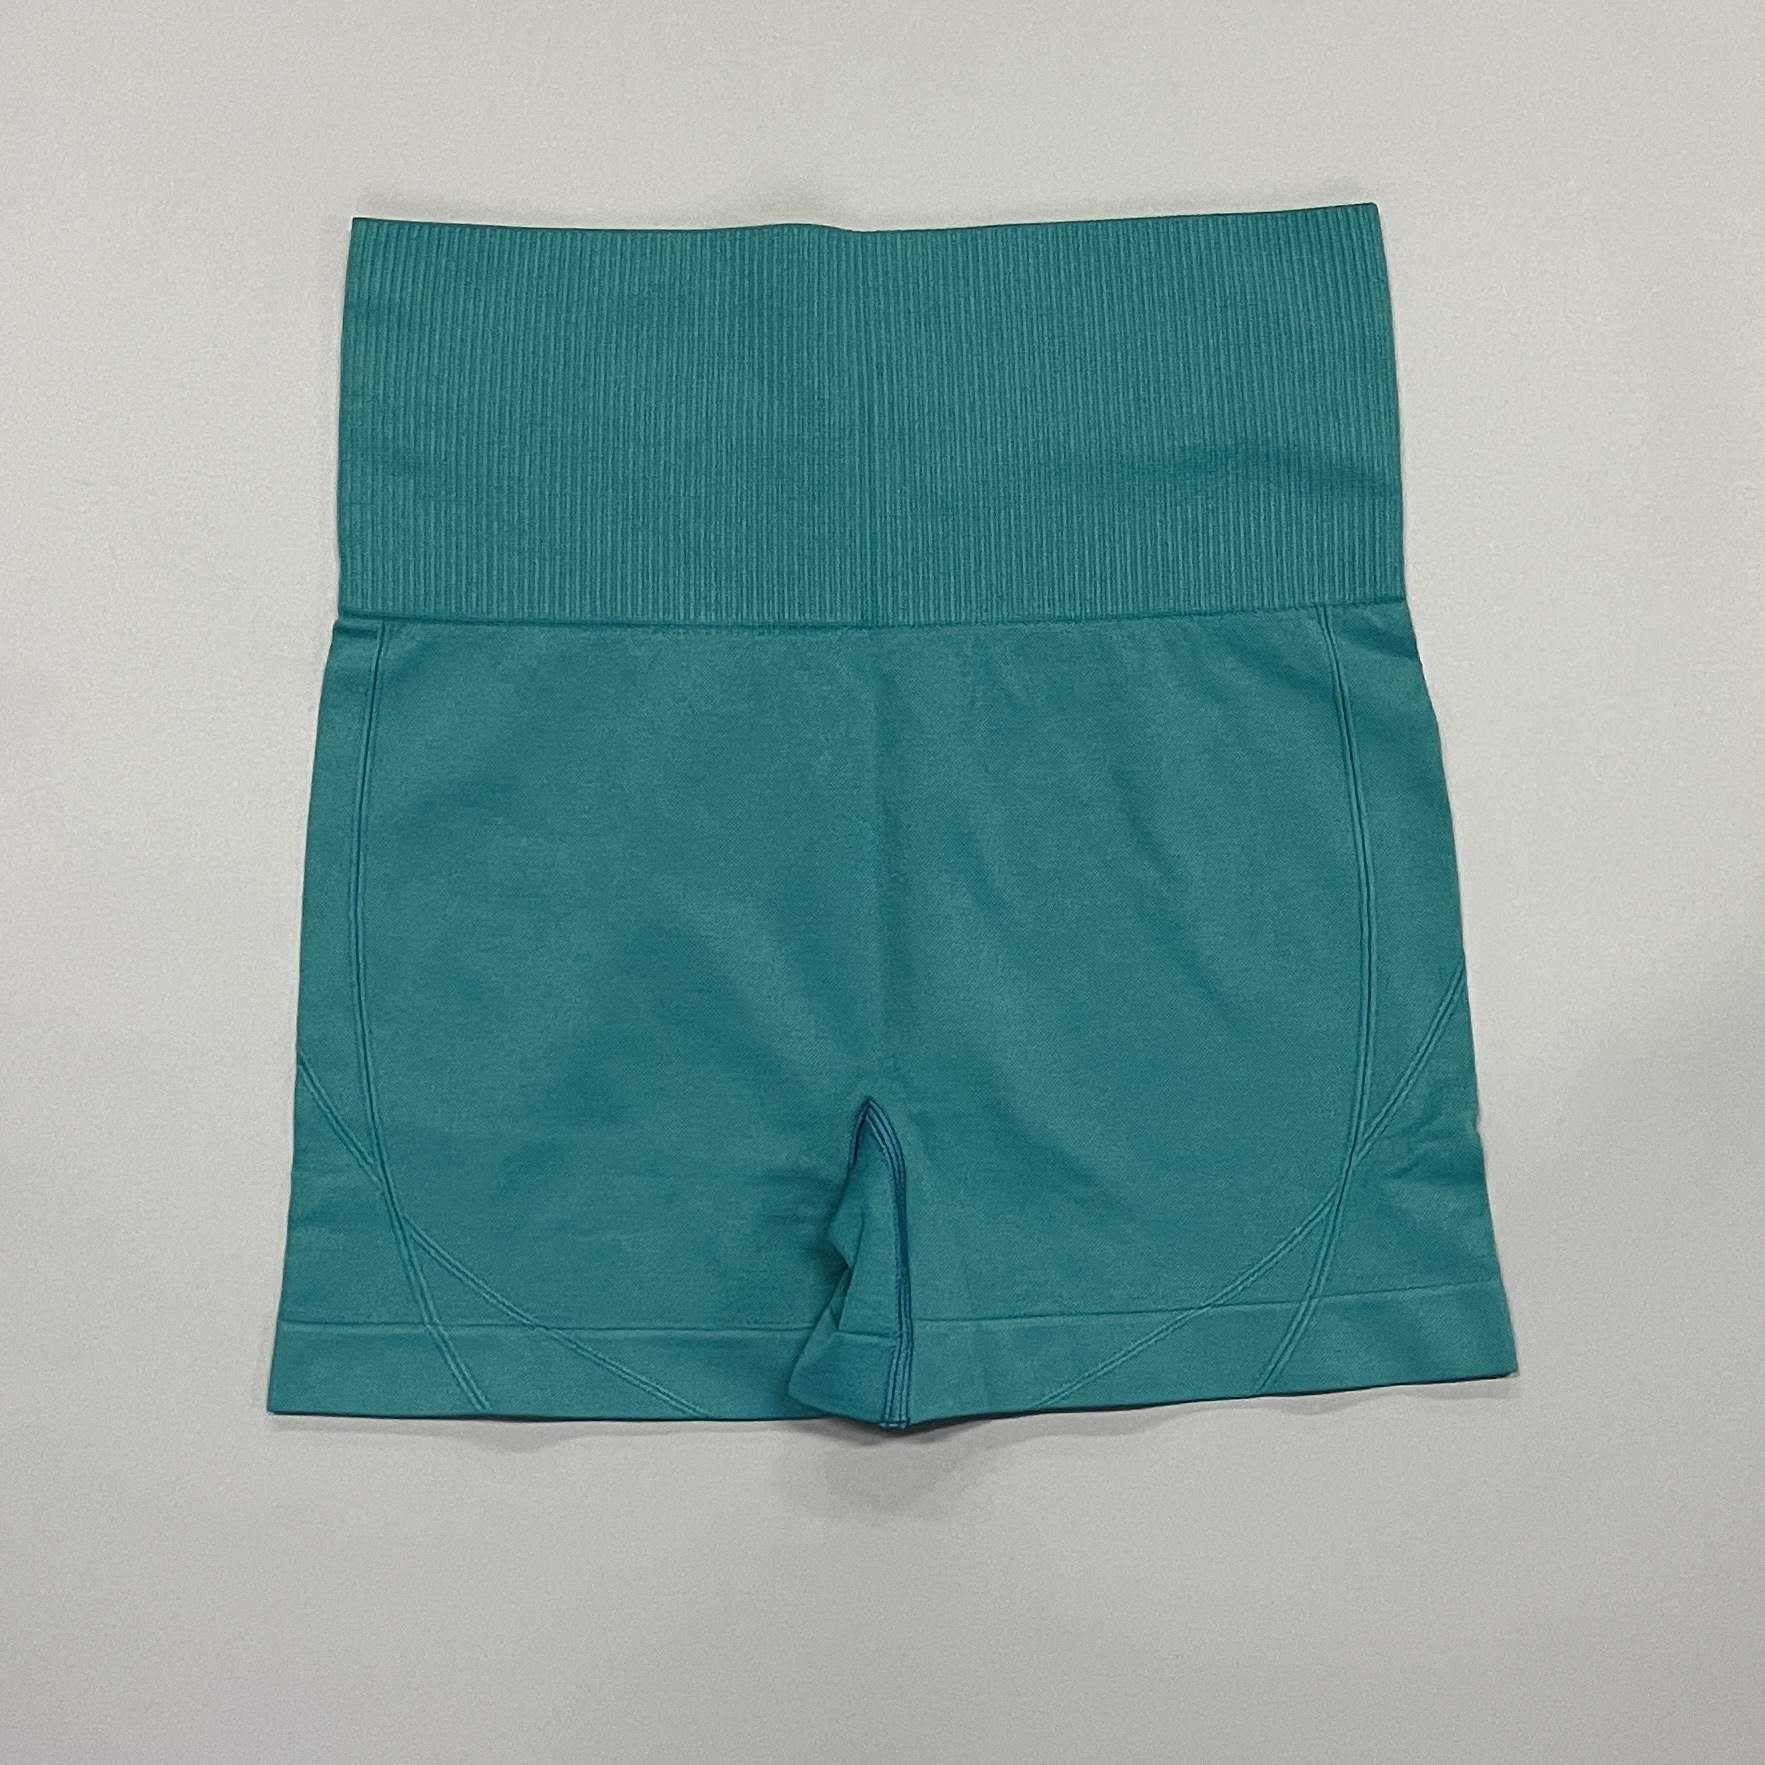 gray green shorts